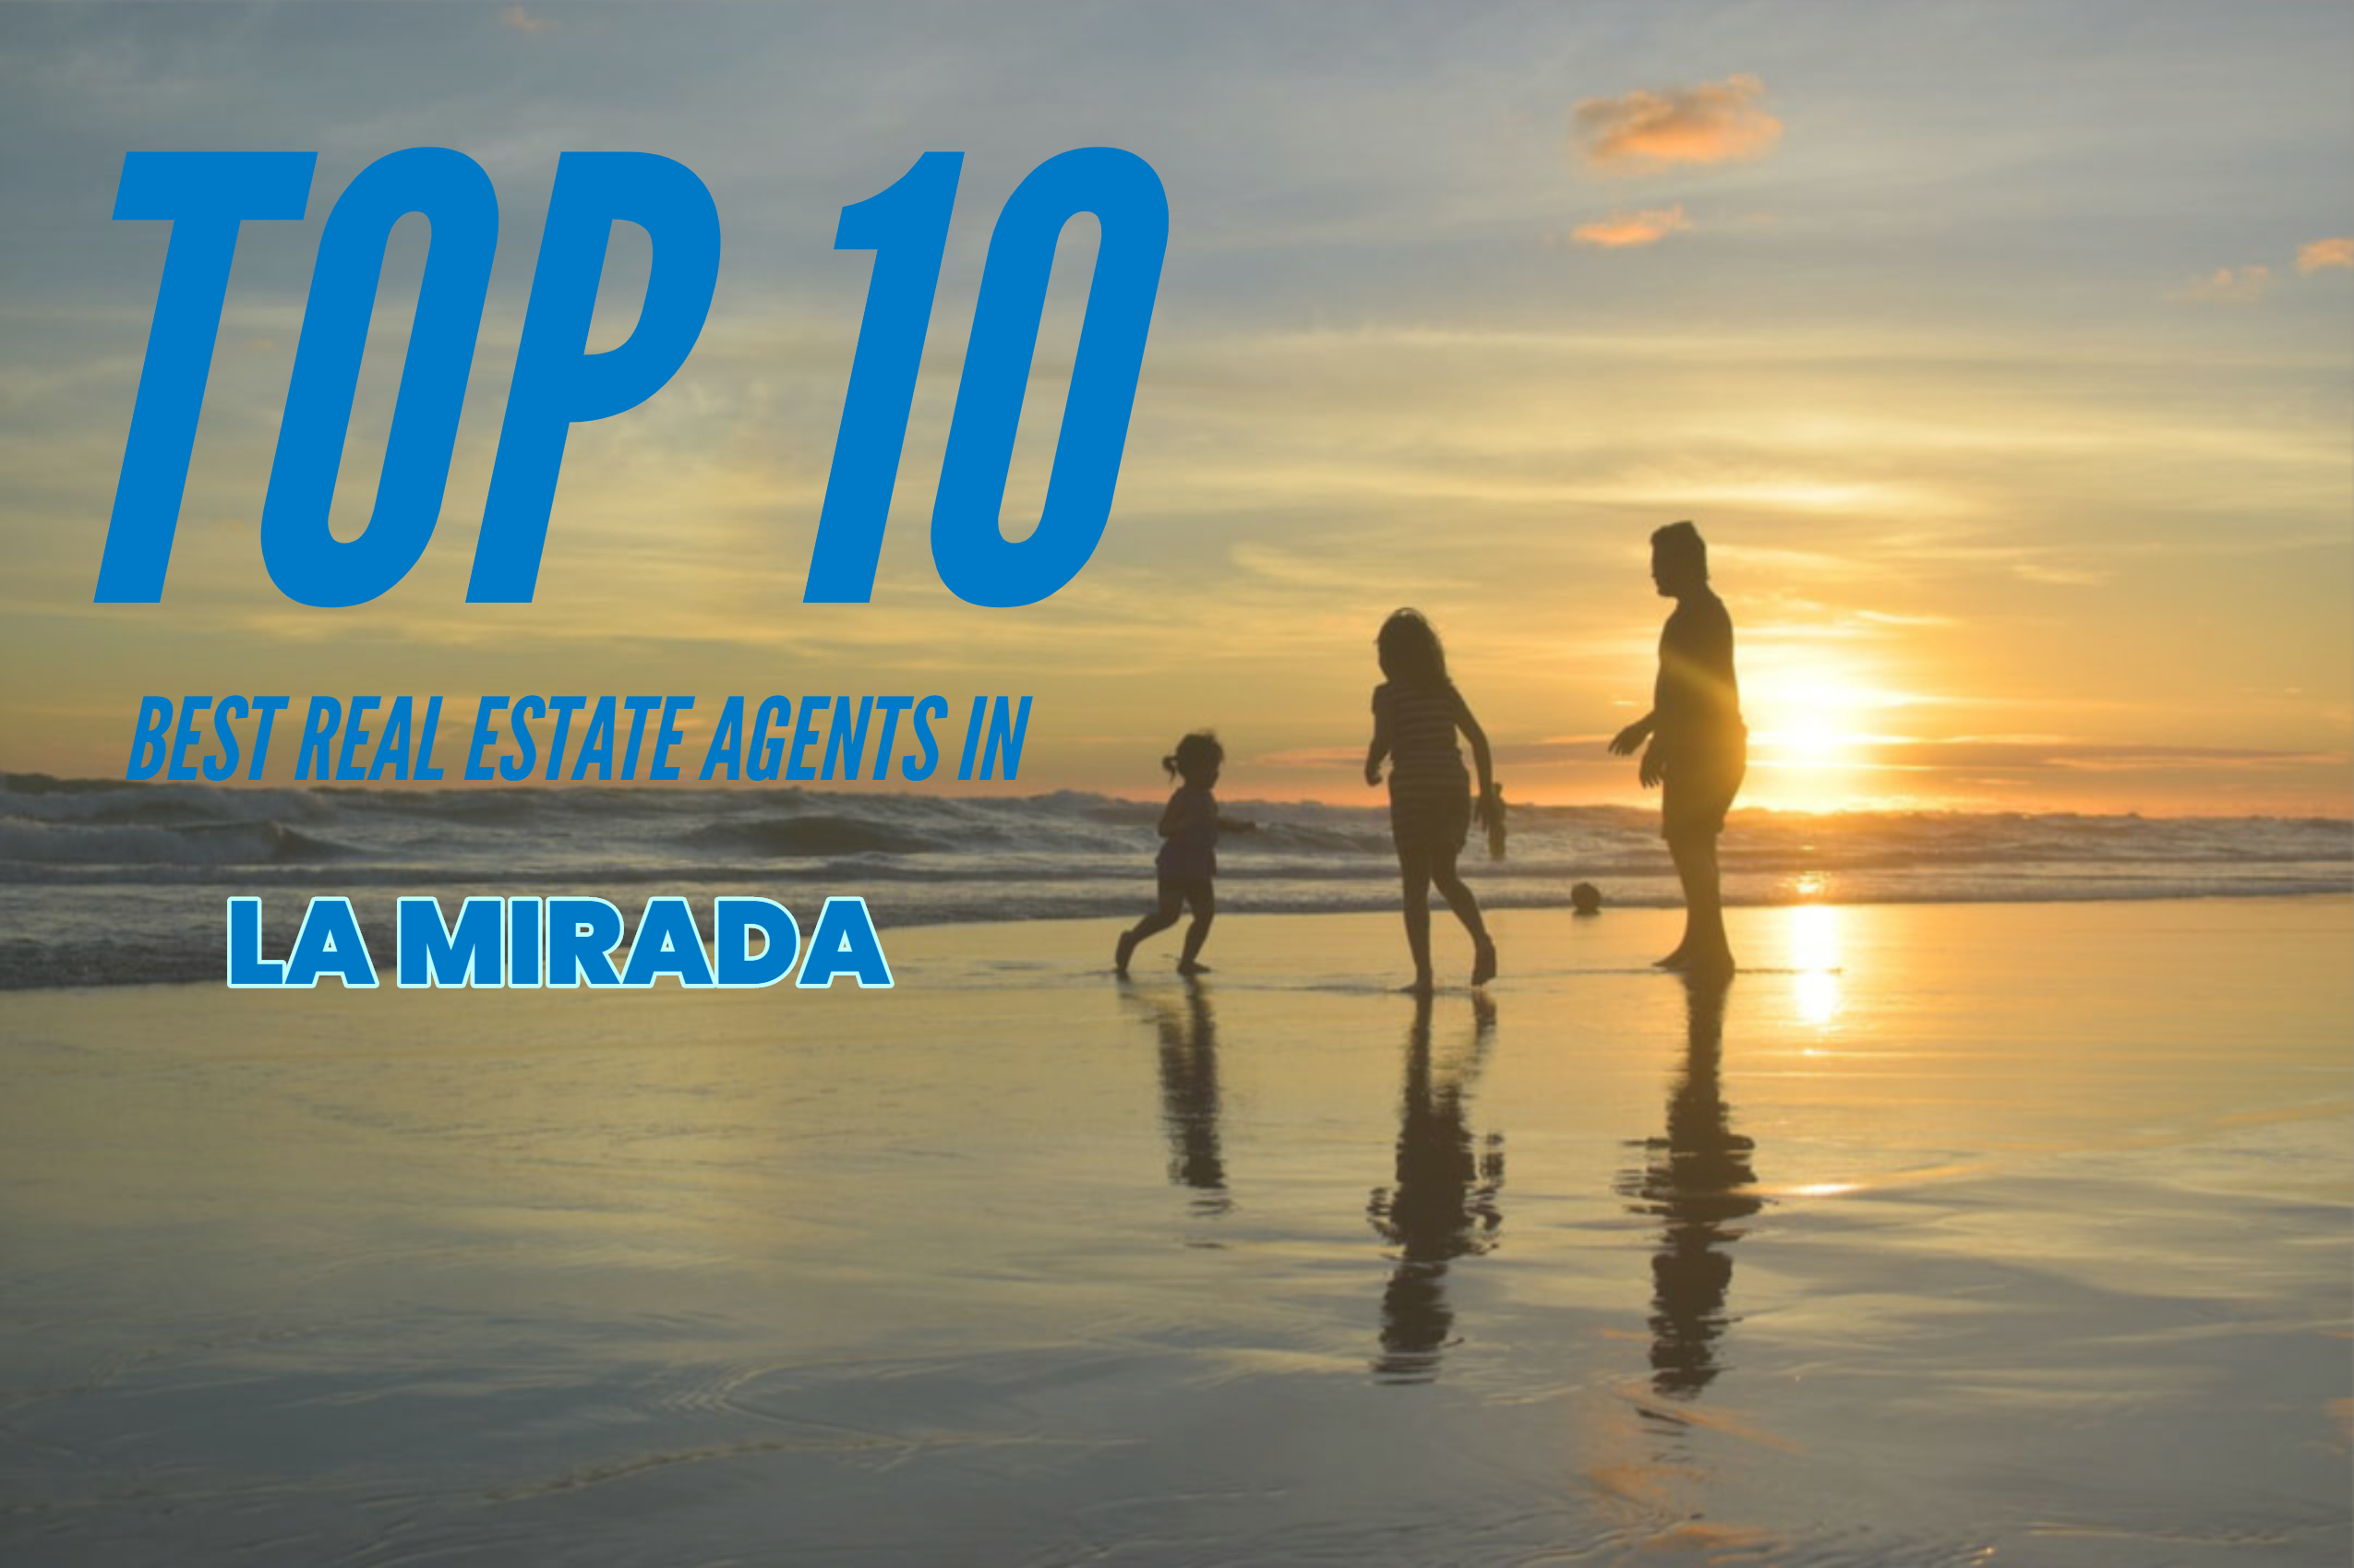 TOP 10 Real Estate Agents in La Mirada